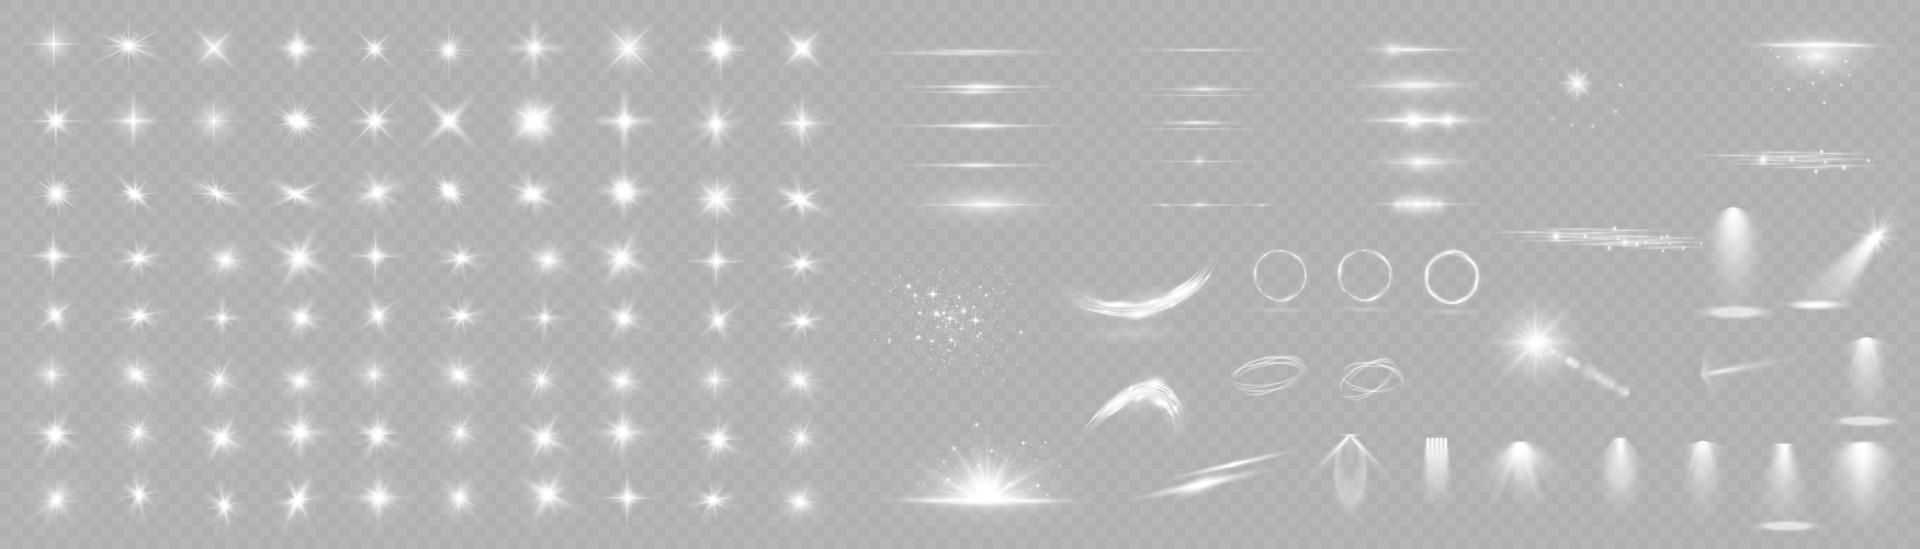 conjunto de efeitos de luz. brilho isolado conjunto de efeitos de luz branca, reflexo de lente, explosão, brilho, poeira, linha, flash de sol, faísca e estrelas, holofotes, giro de curva. luz solar, efeito especial abstrato. vetor